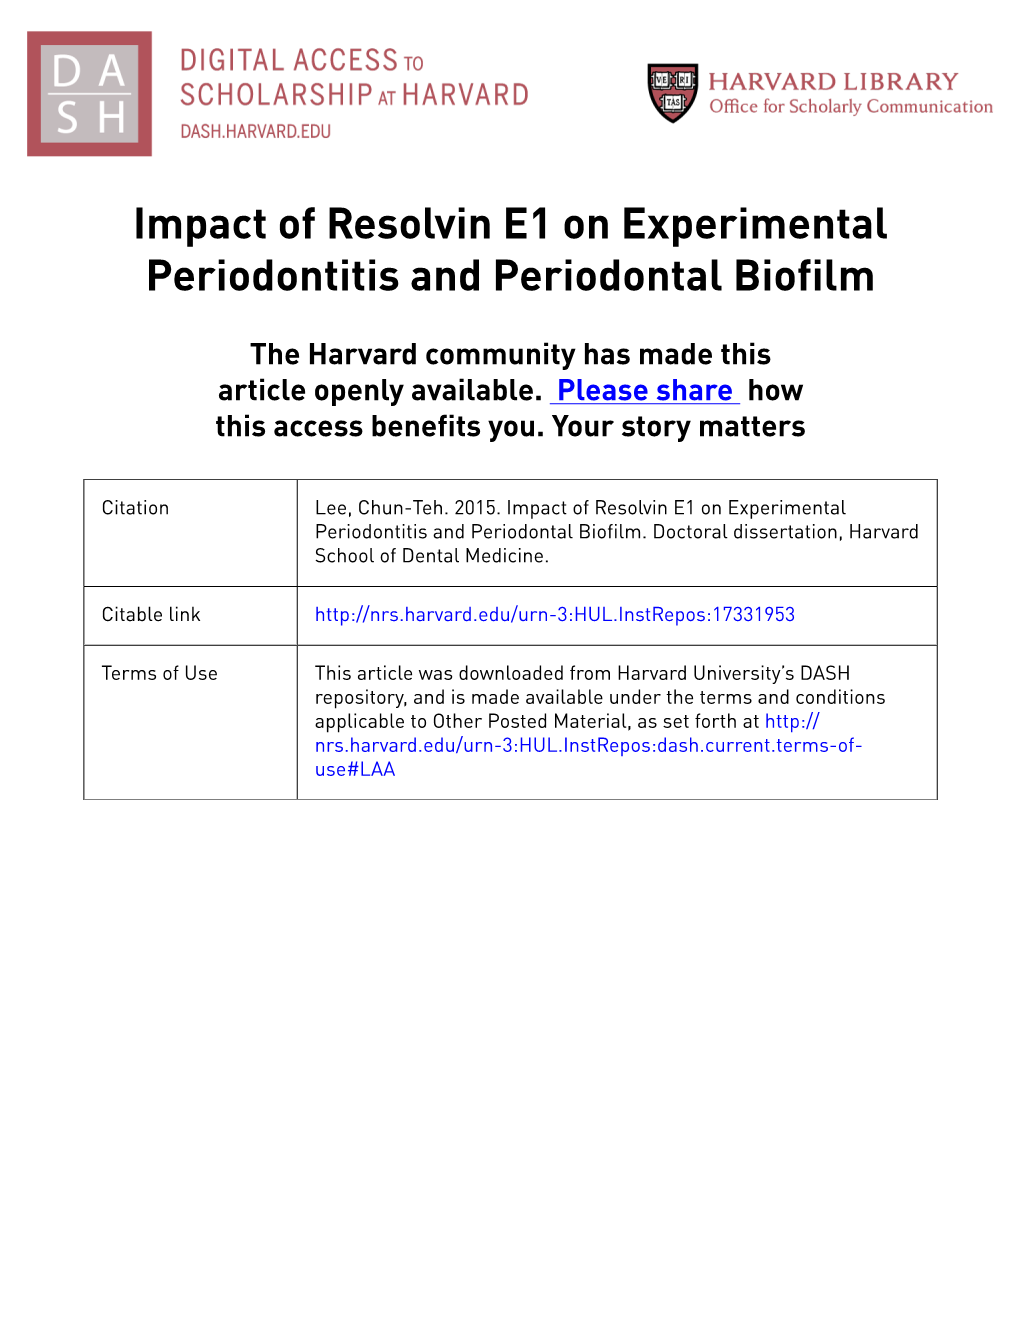 Impact of Resolvin E1 on Experimental Periodontitis and Periodontal Biofilm